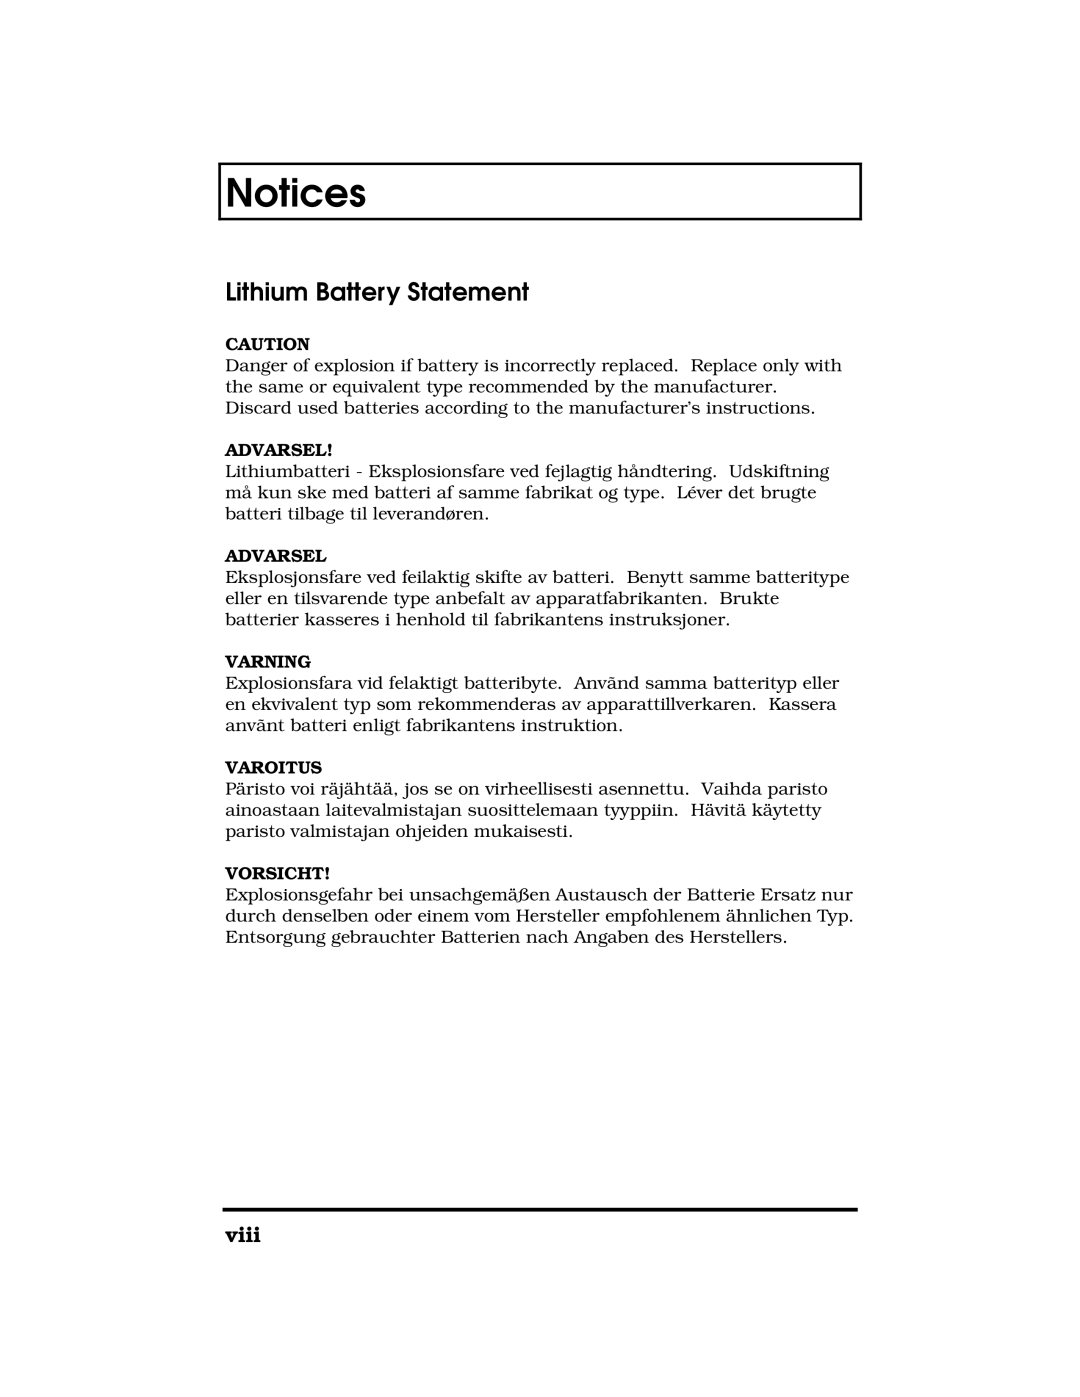 Acer 390 Series manual Lithium Battery Statement, viii, Notices, Advarsel, Varning, Varoitus, Vorsicht 